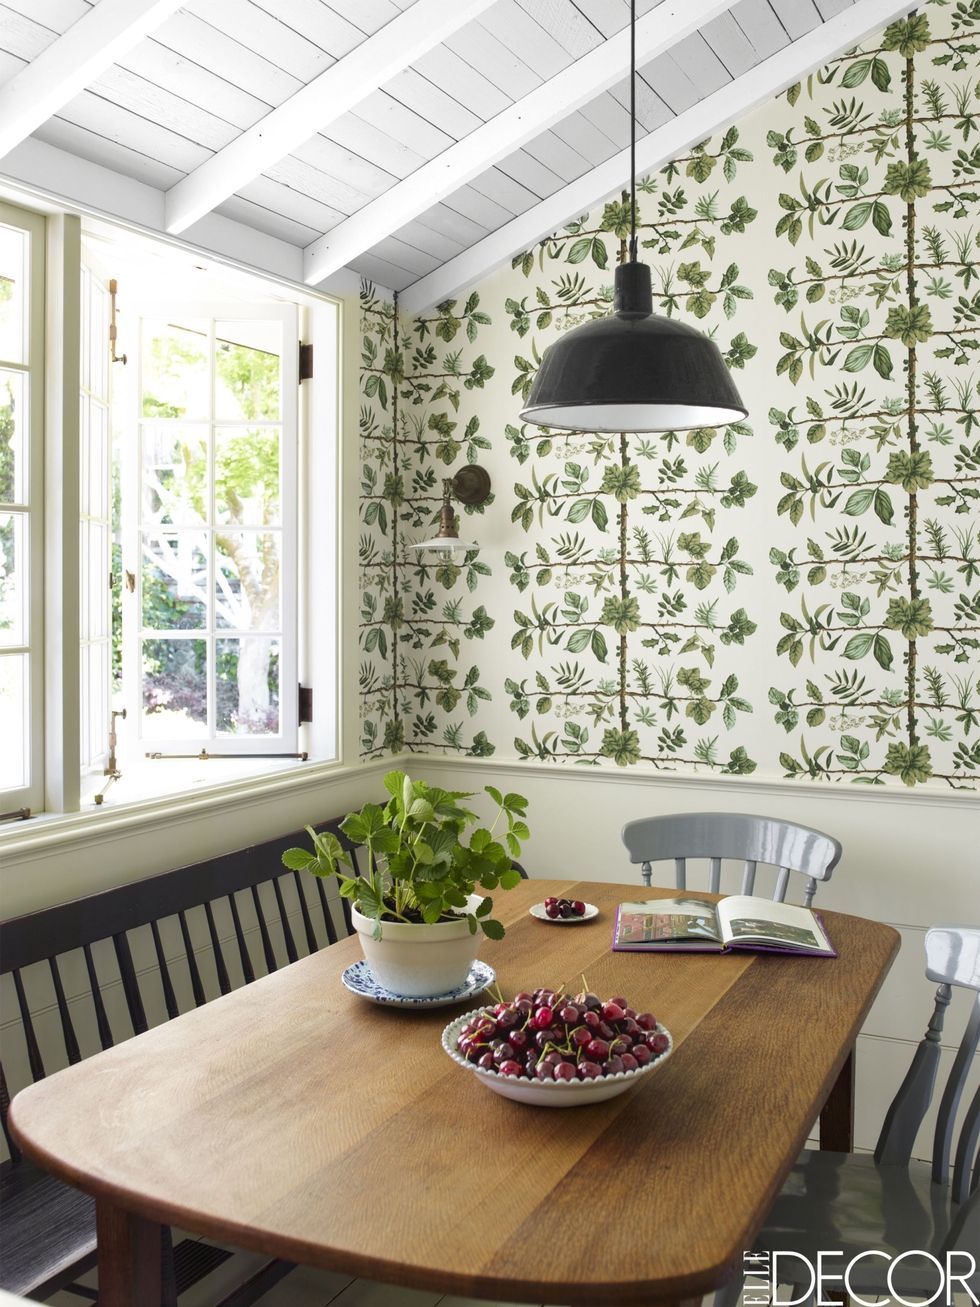 Kitchen wallpaper ideas for modern interiors - Feathr™ Wallpapers